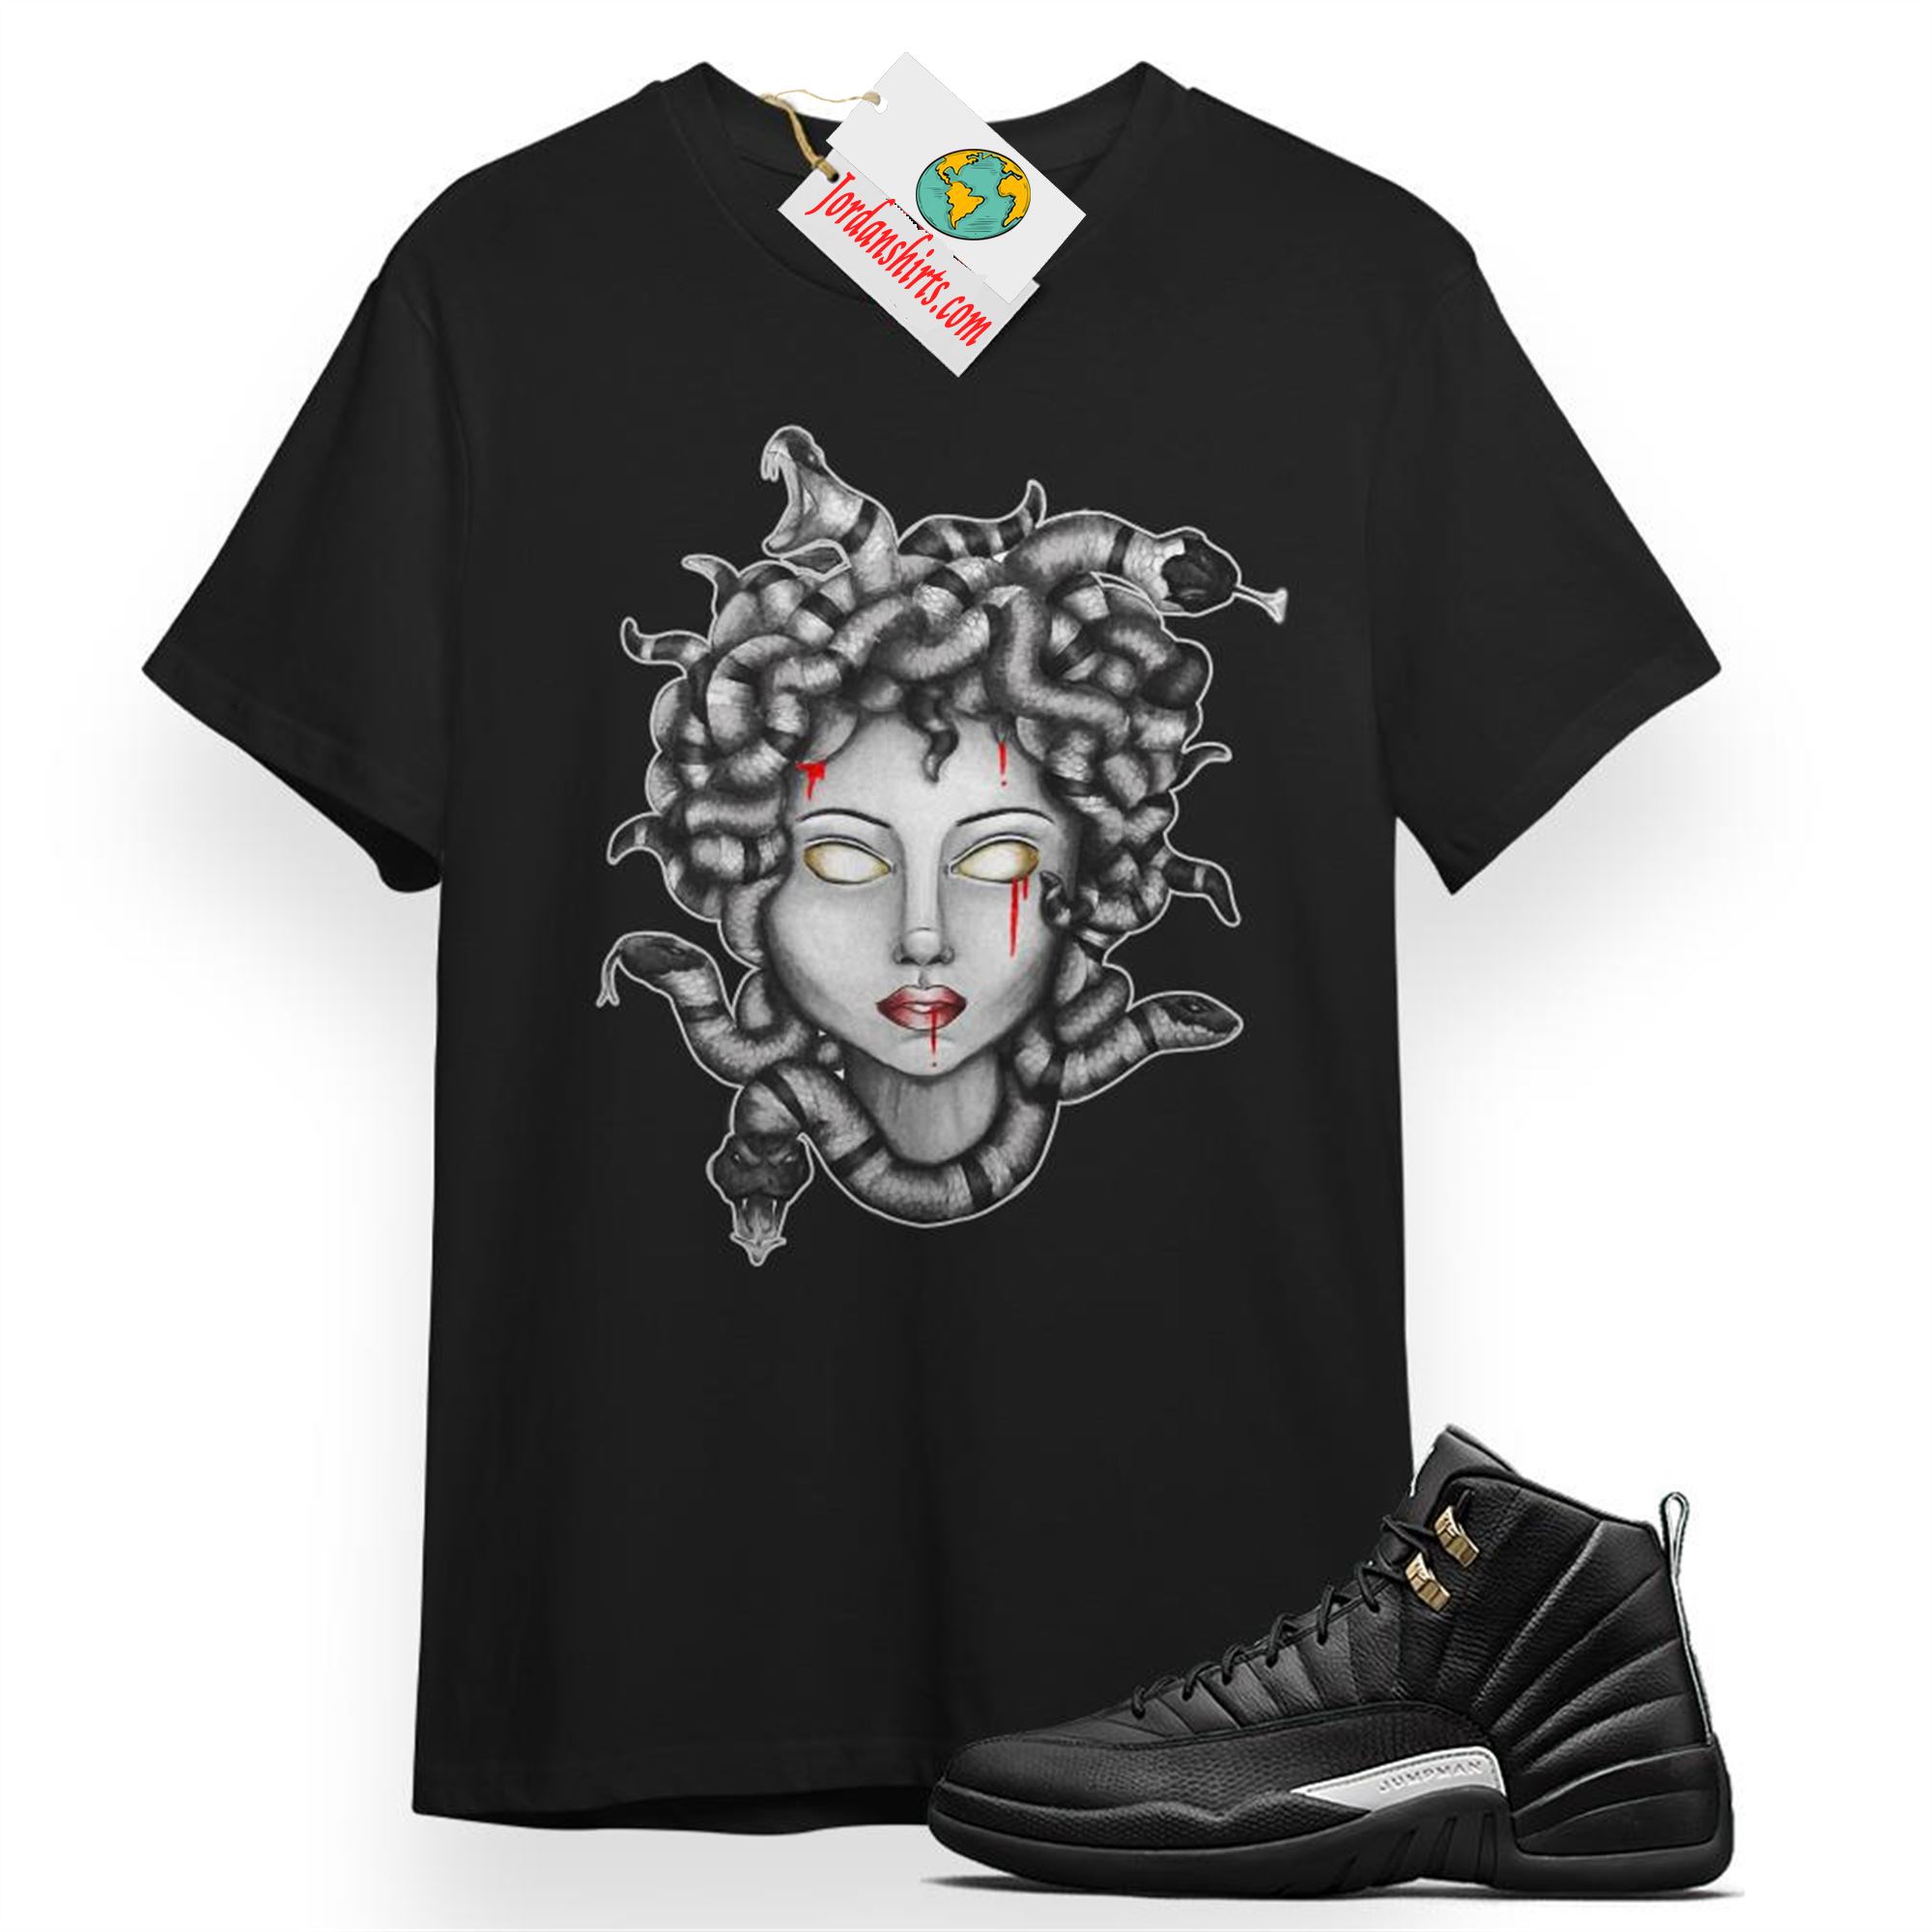 Jordan 12 Shirt, Medusa Snake Black T-shirt Air Jordan 12 Master 12s Plus Size Up To 5xl